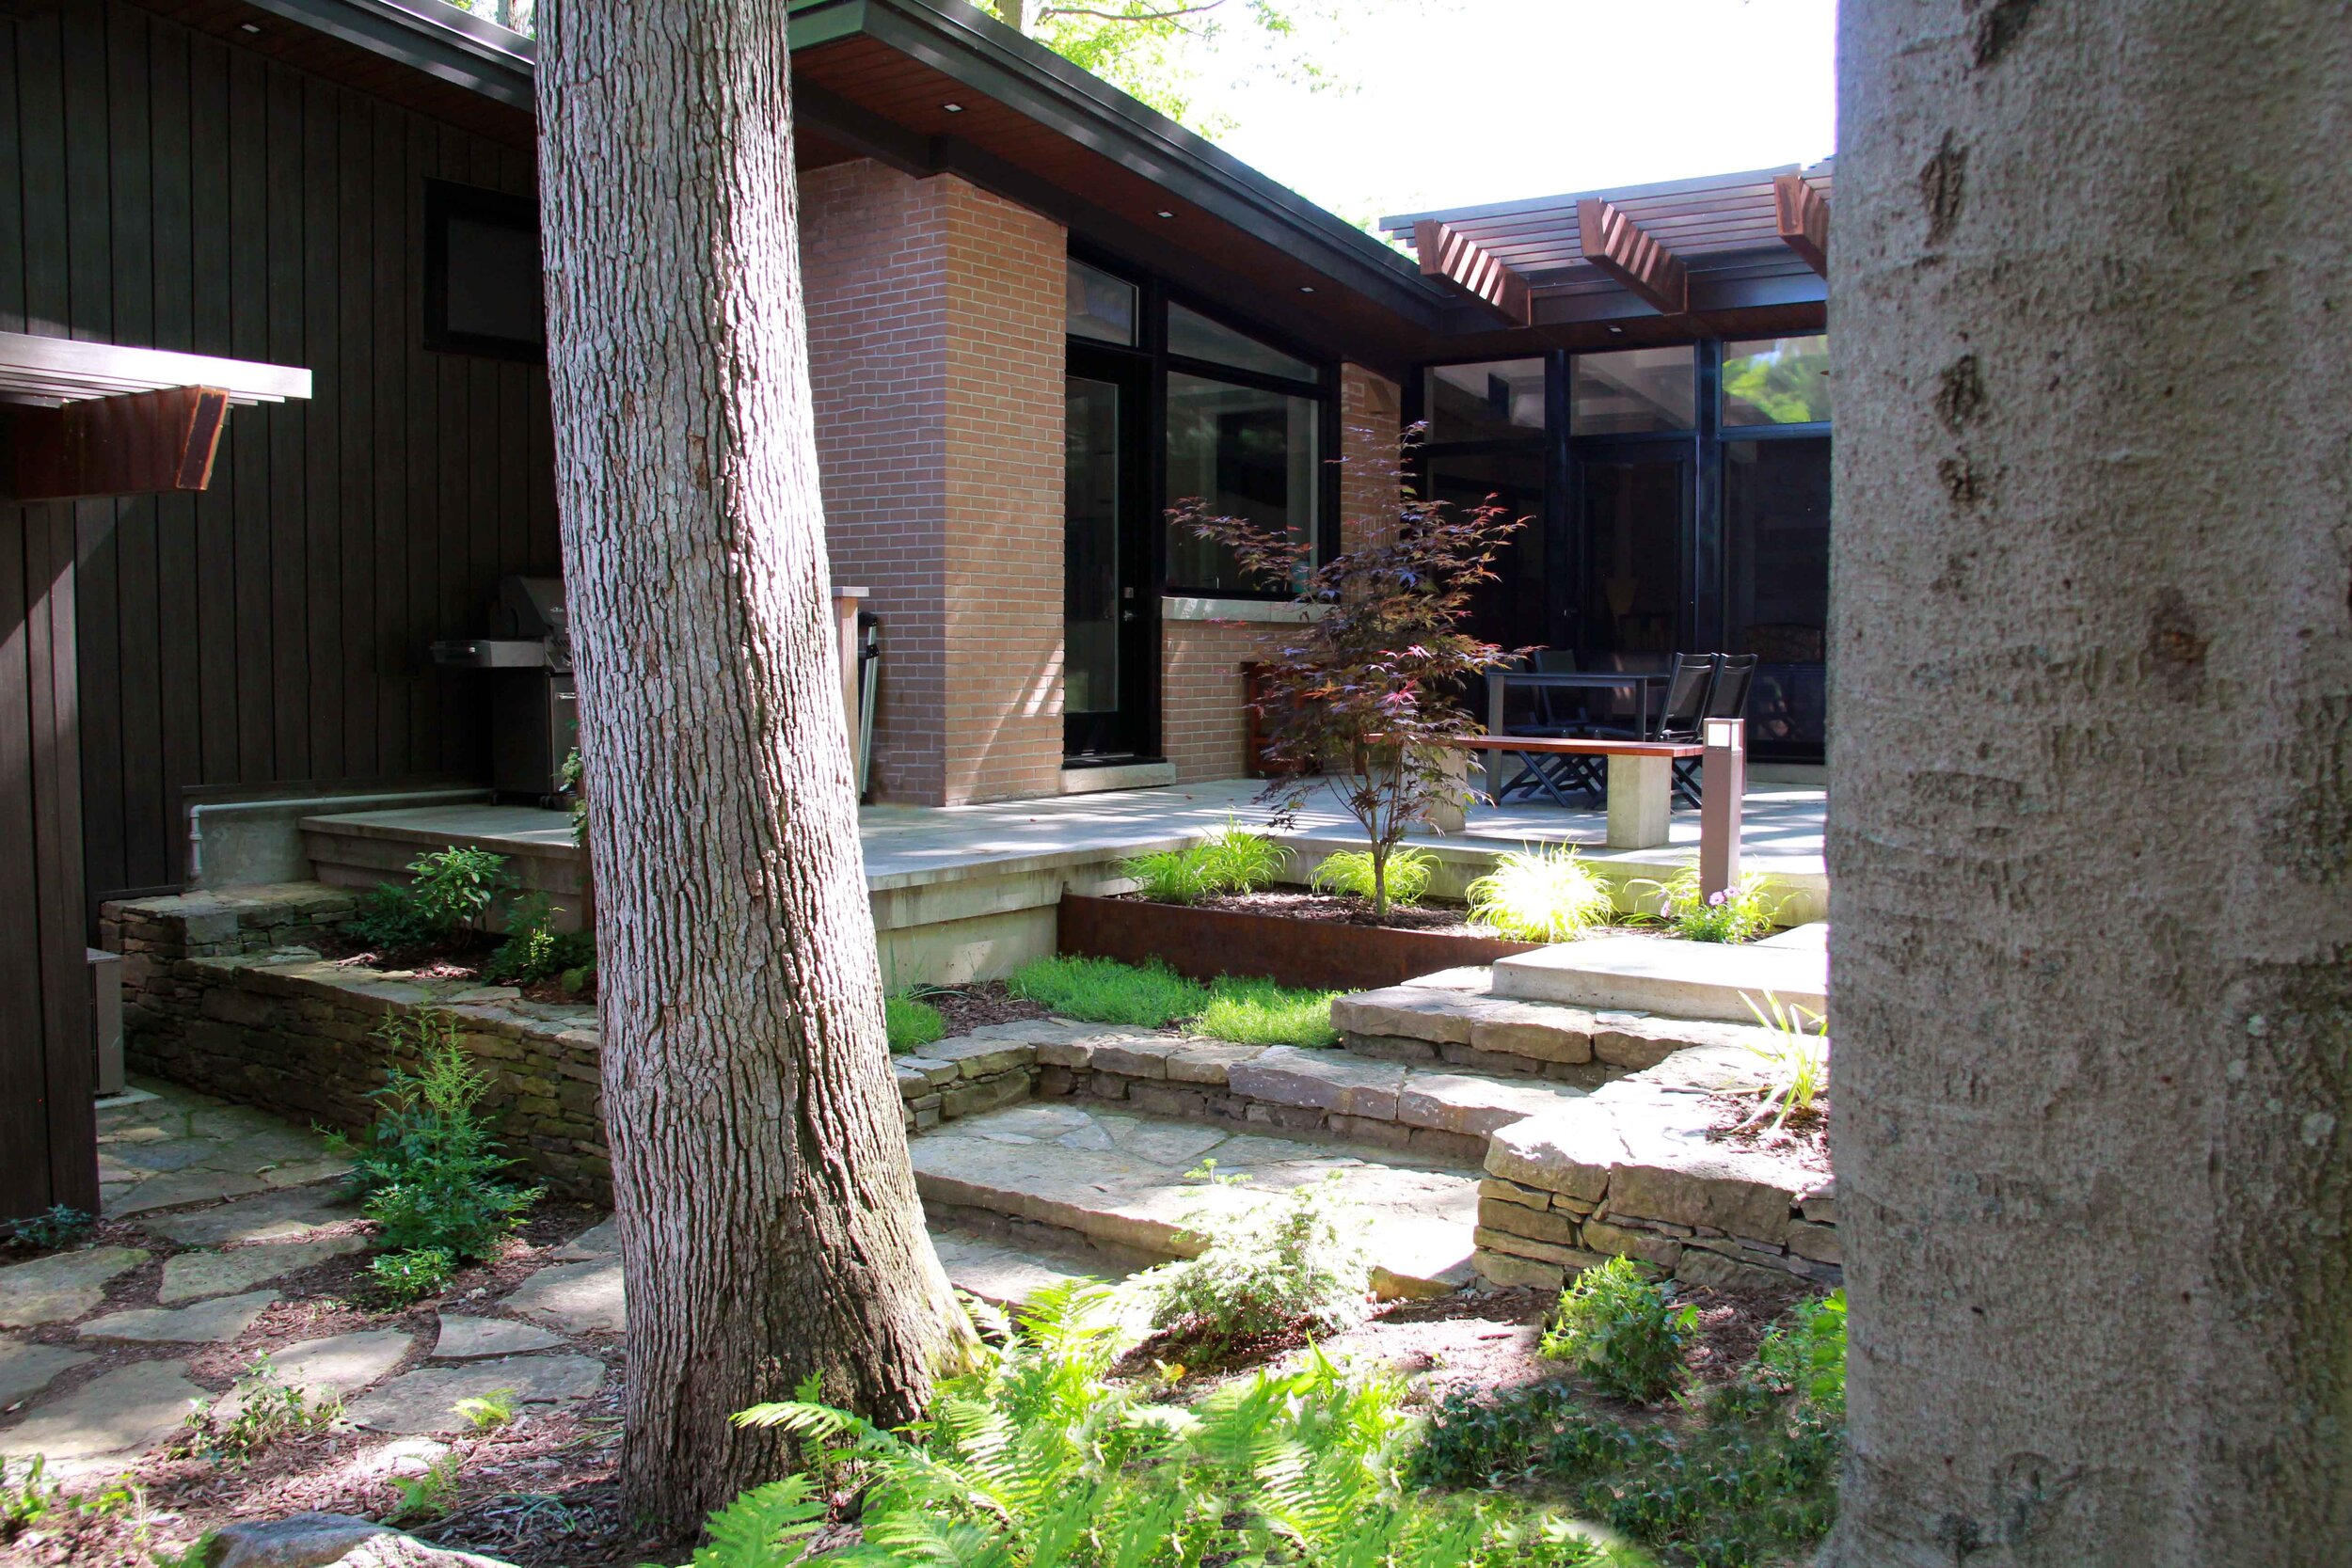 Oak tree-Beech tree-Hardscape-Backyard Landscape-Dry laid Natural stone- Poured concrete-ground cover-Modern- Arbor elements-concrete porch-Mid century modern home.jpg